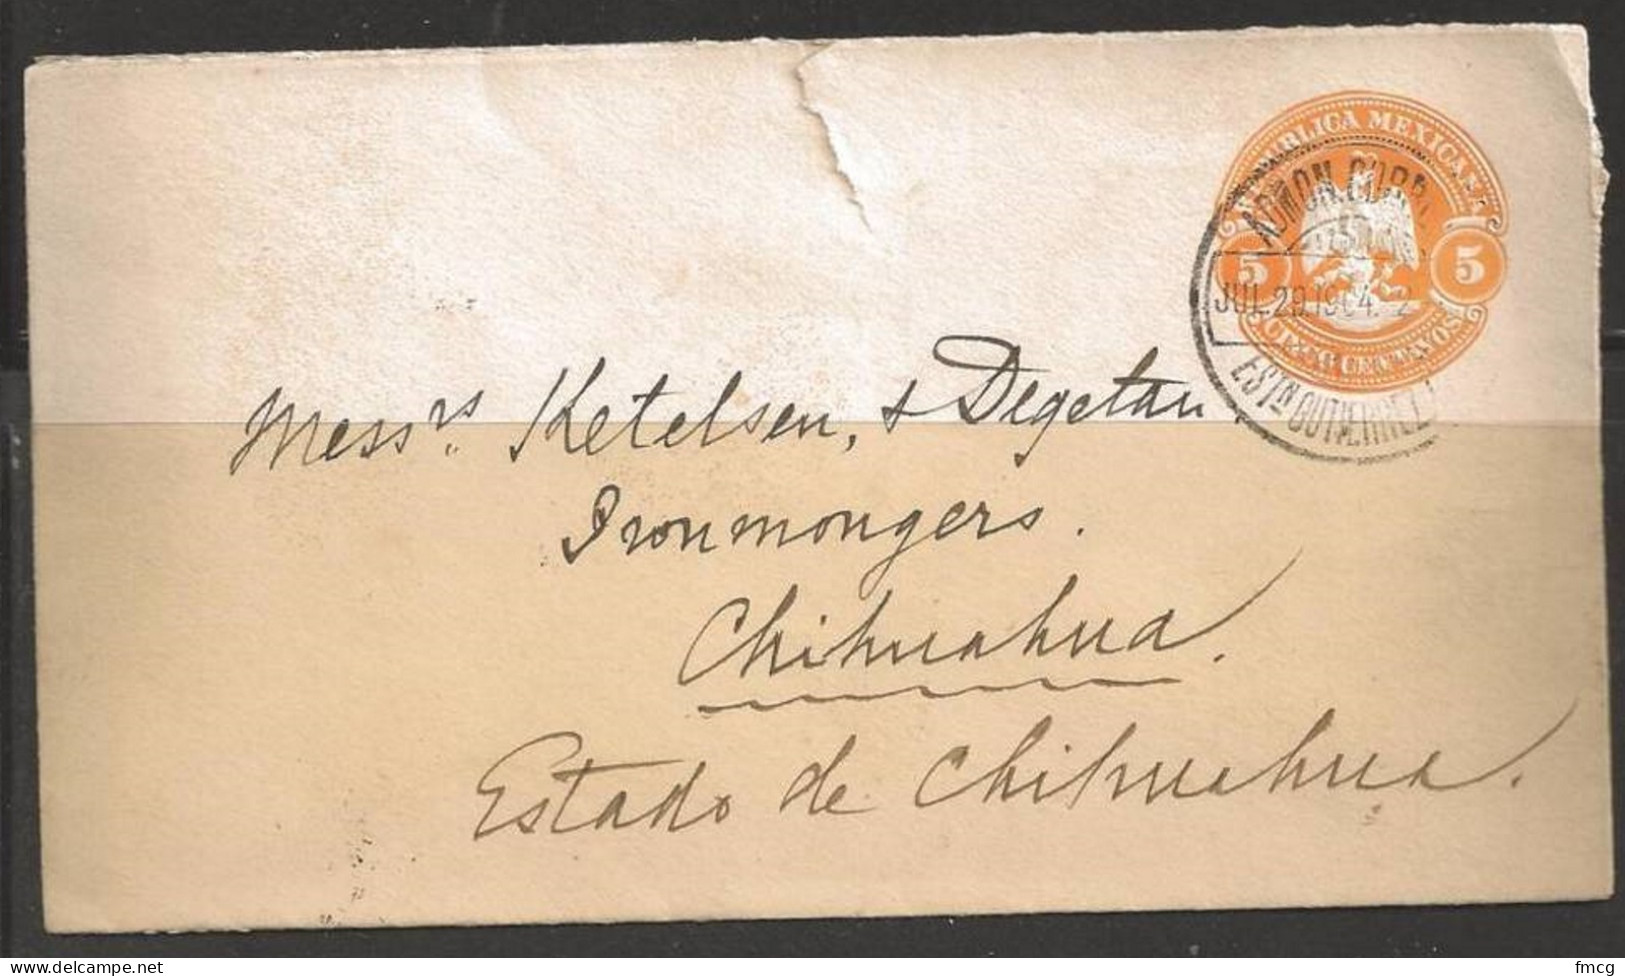 Mexico 1904 5c Postal Envelope Used Jul 29 1904, Chinuahua - Mexique